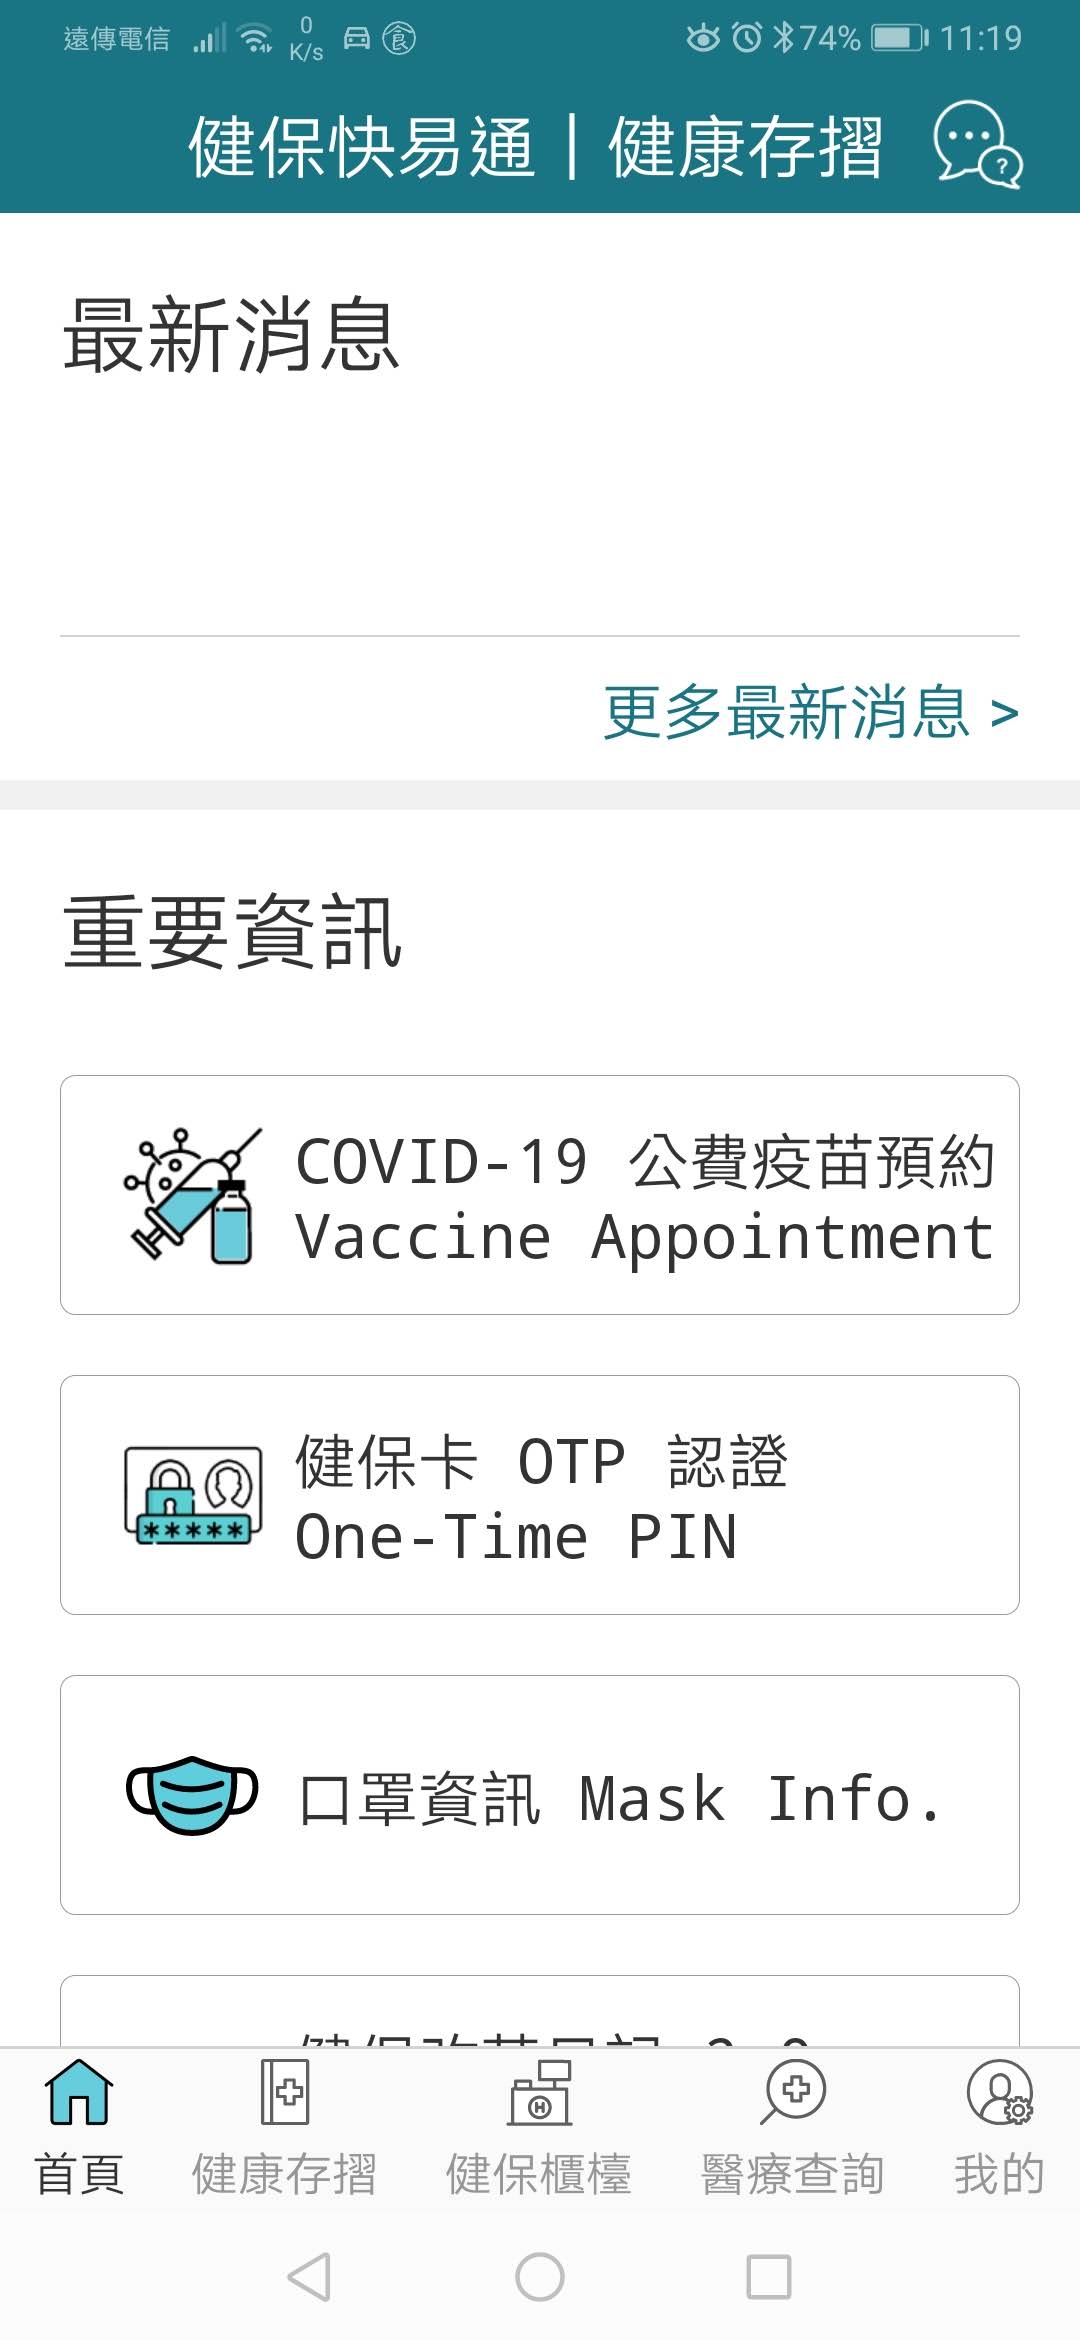 COVID-19疫苗預約平台|意願登記教學\如何預約施打地點時間\1922 @假日農夫愛趴趴照